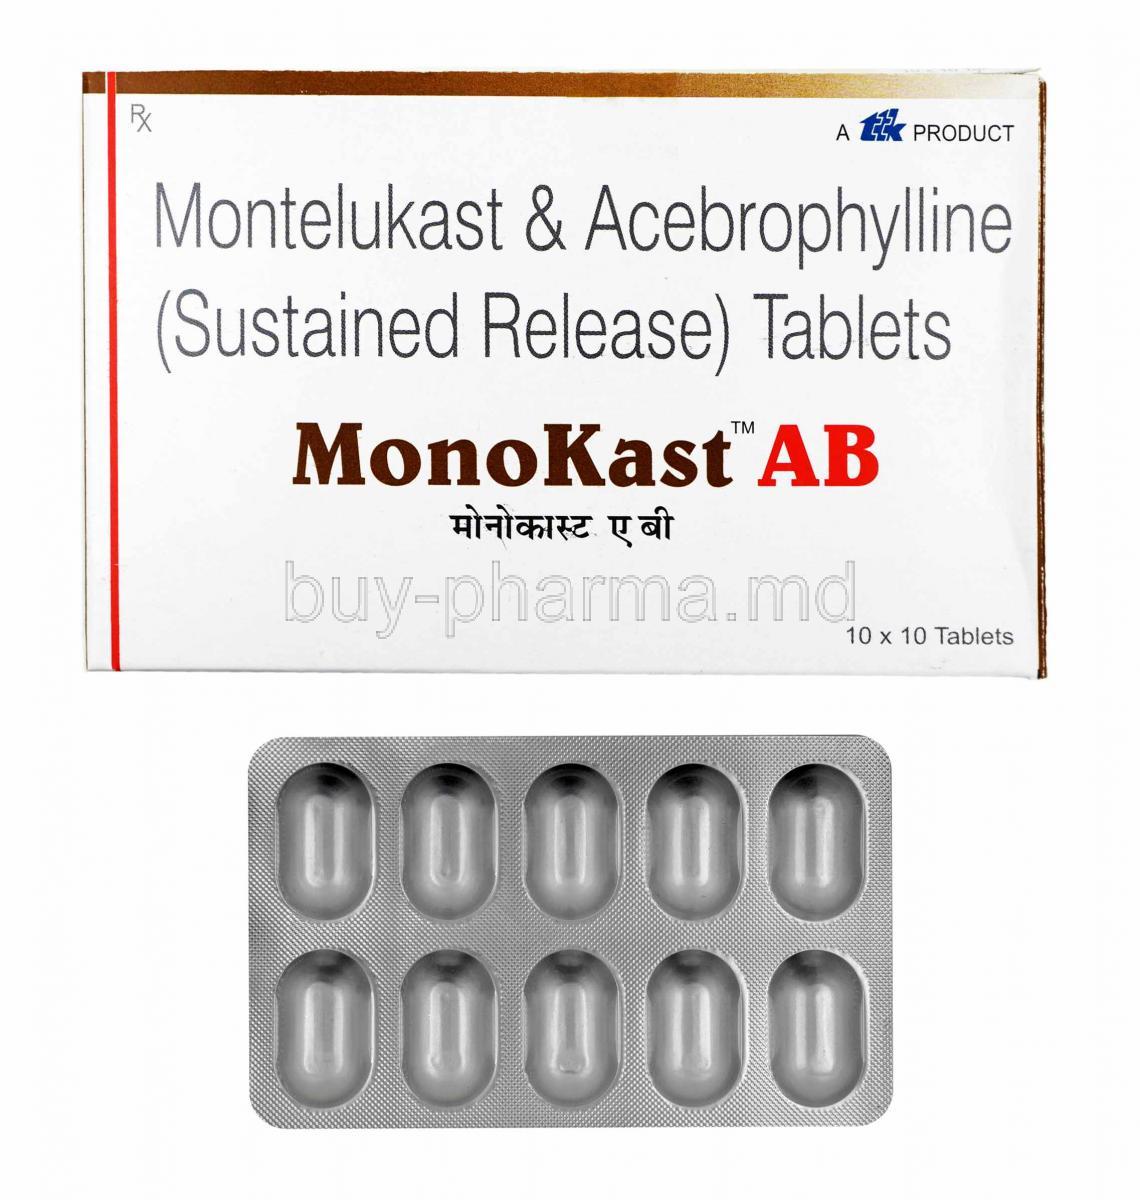 Monokast AB, Acebrophylline and Montelukast box and tablets